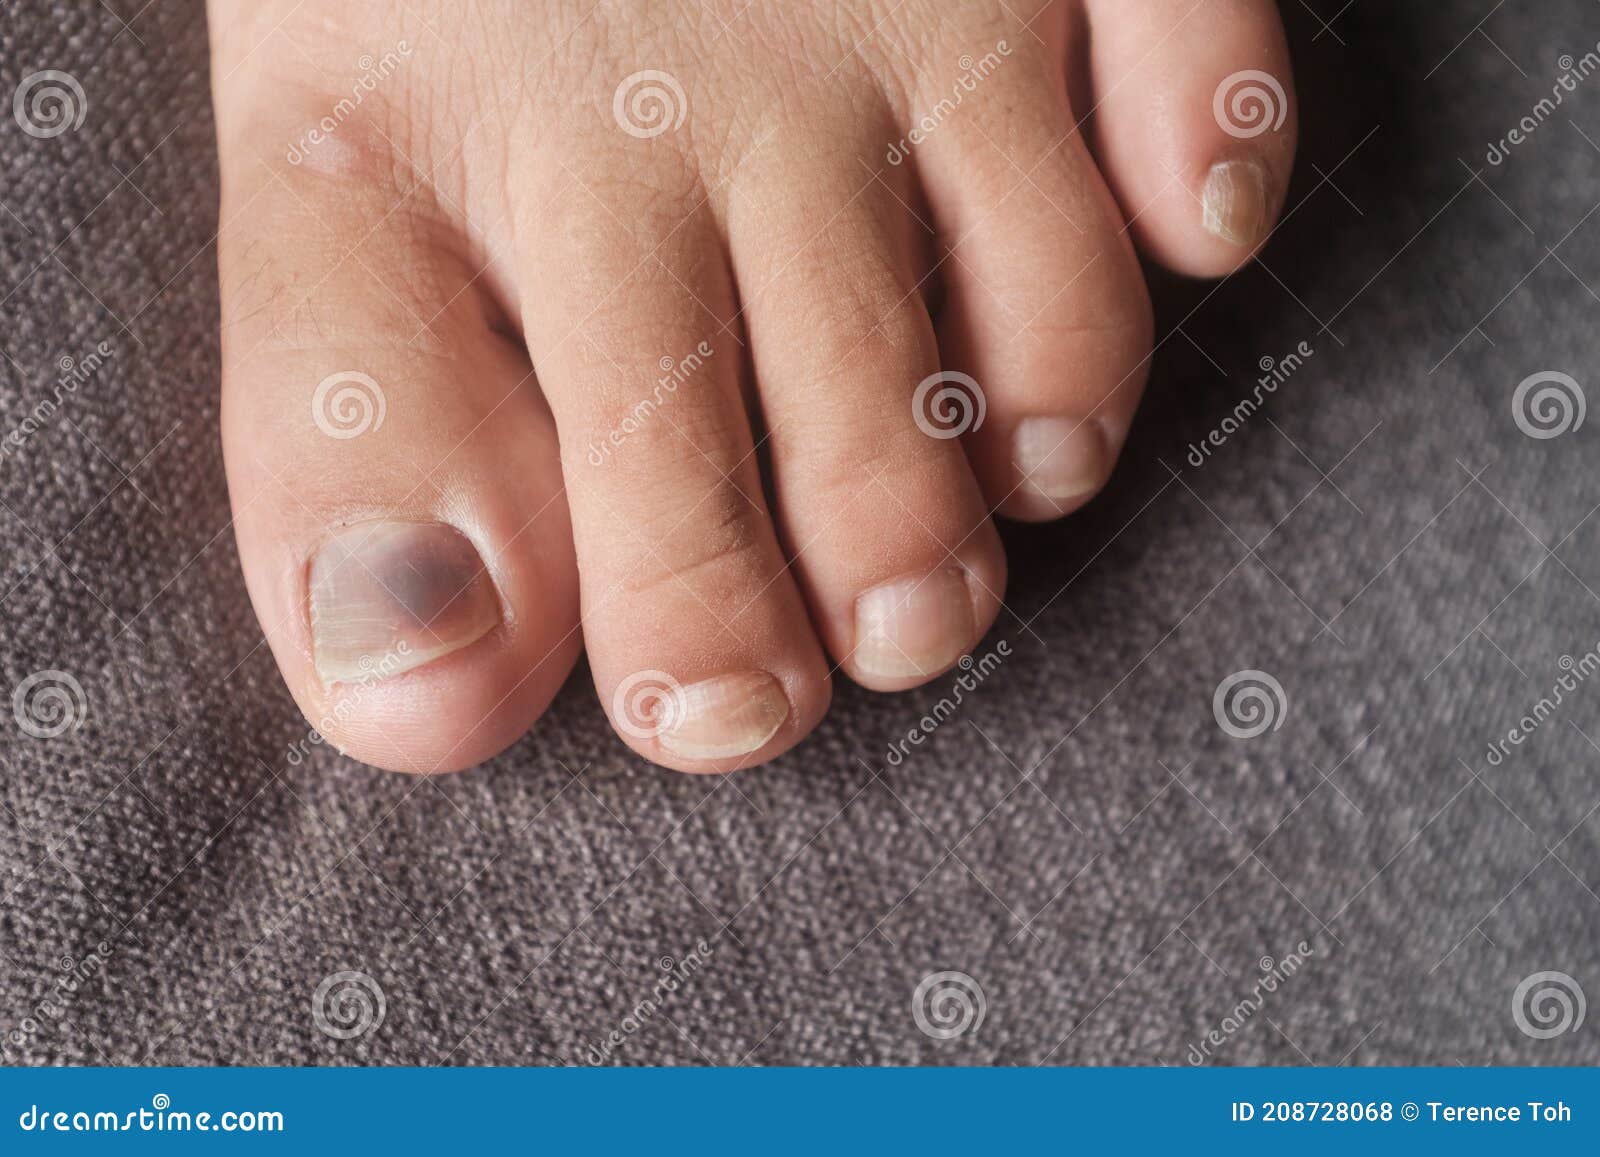 Toe nail fungus toenail trauma Foot injury with nail separation from nail  bed Stock Photo  Alamy